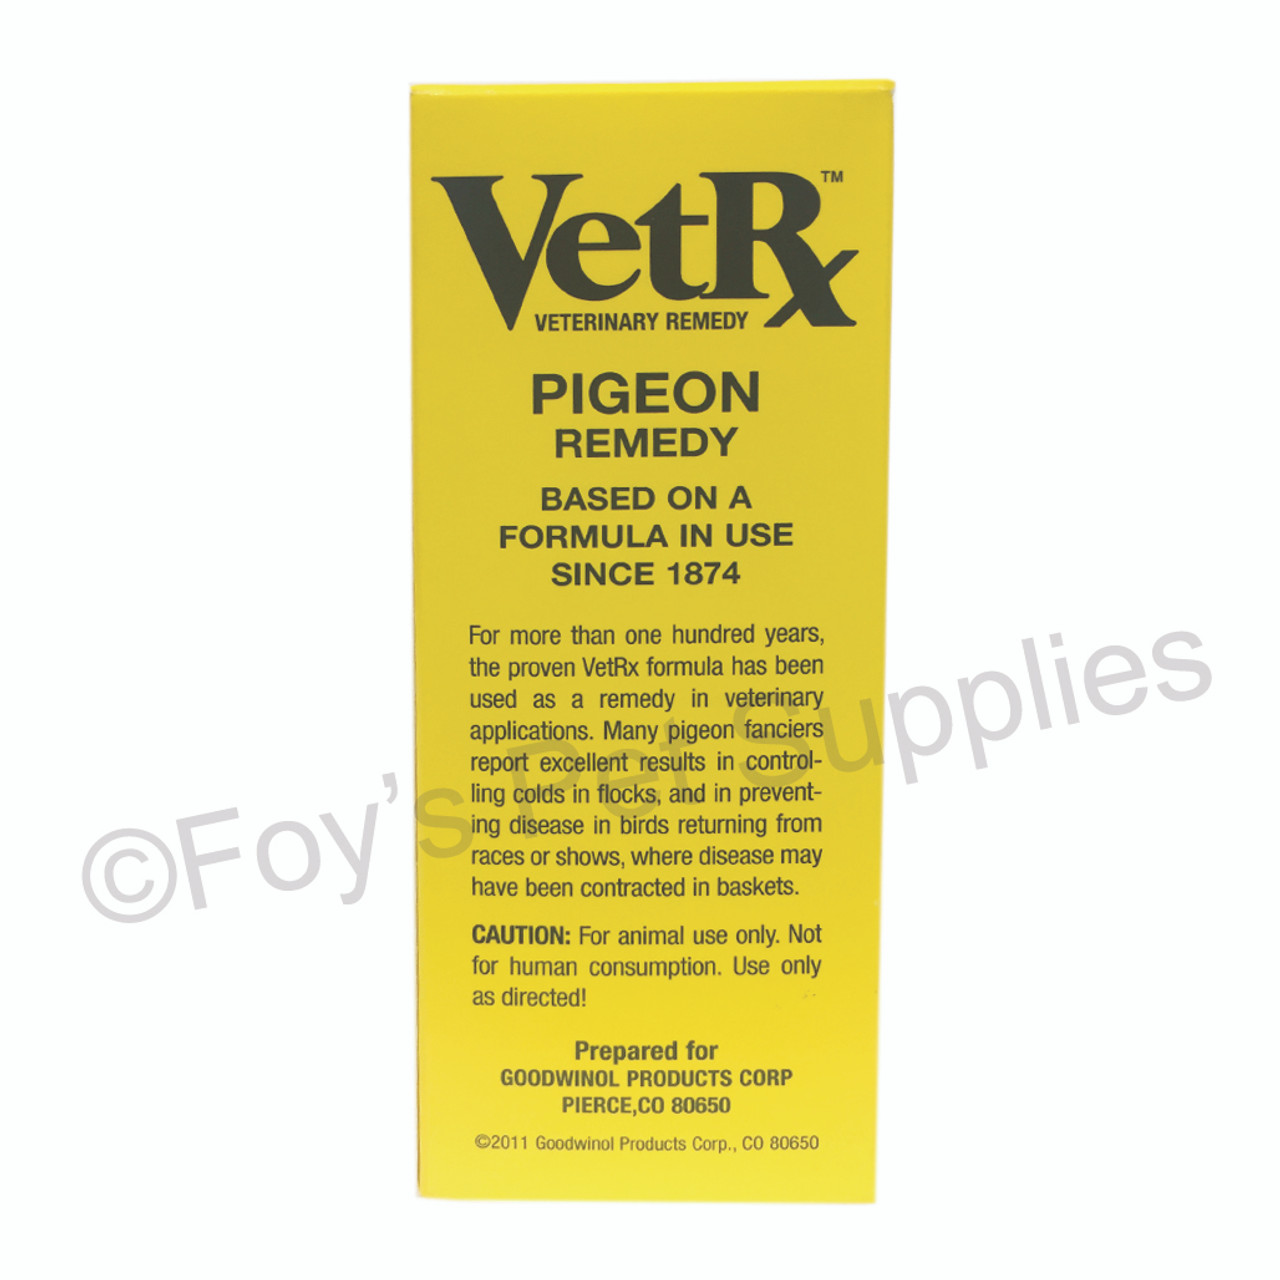 vetrx pigeon remedy